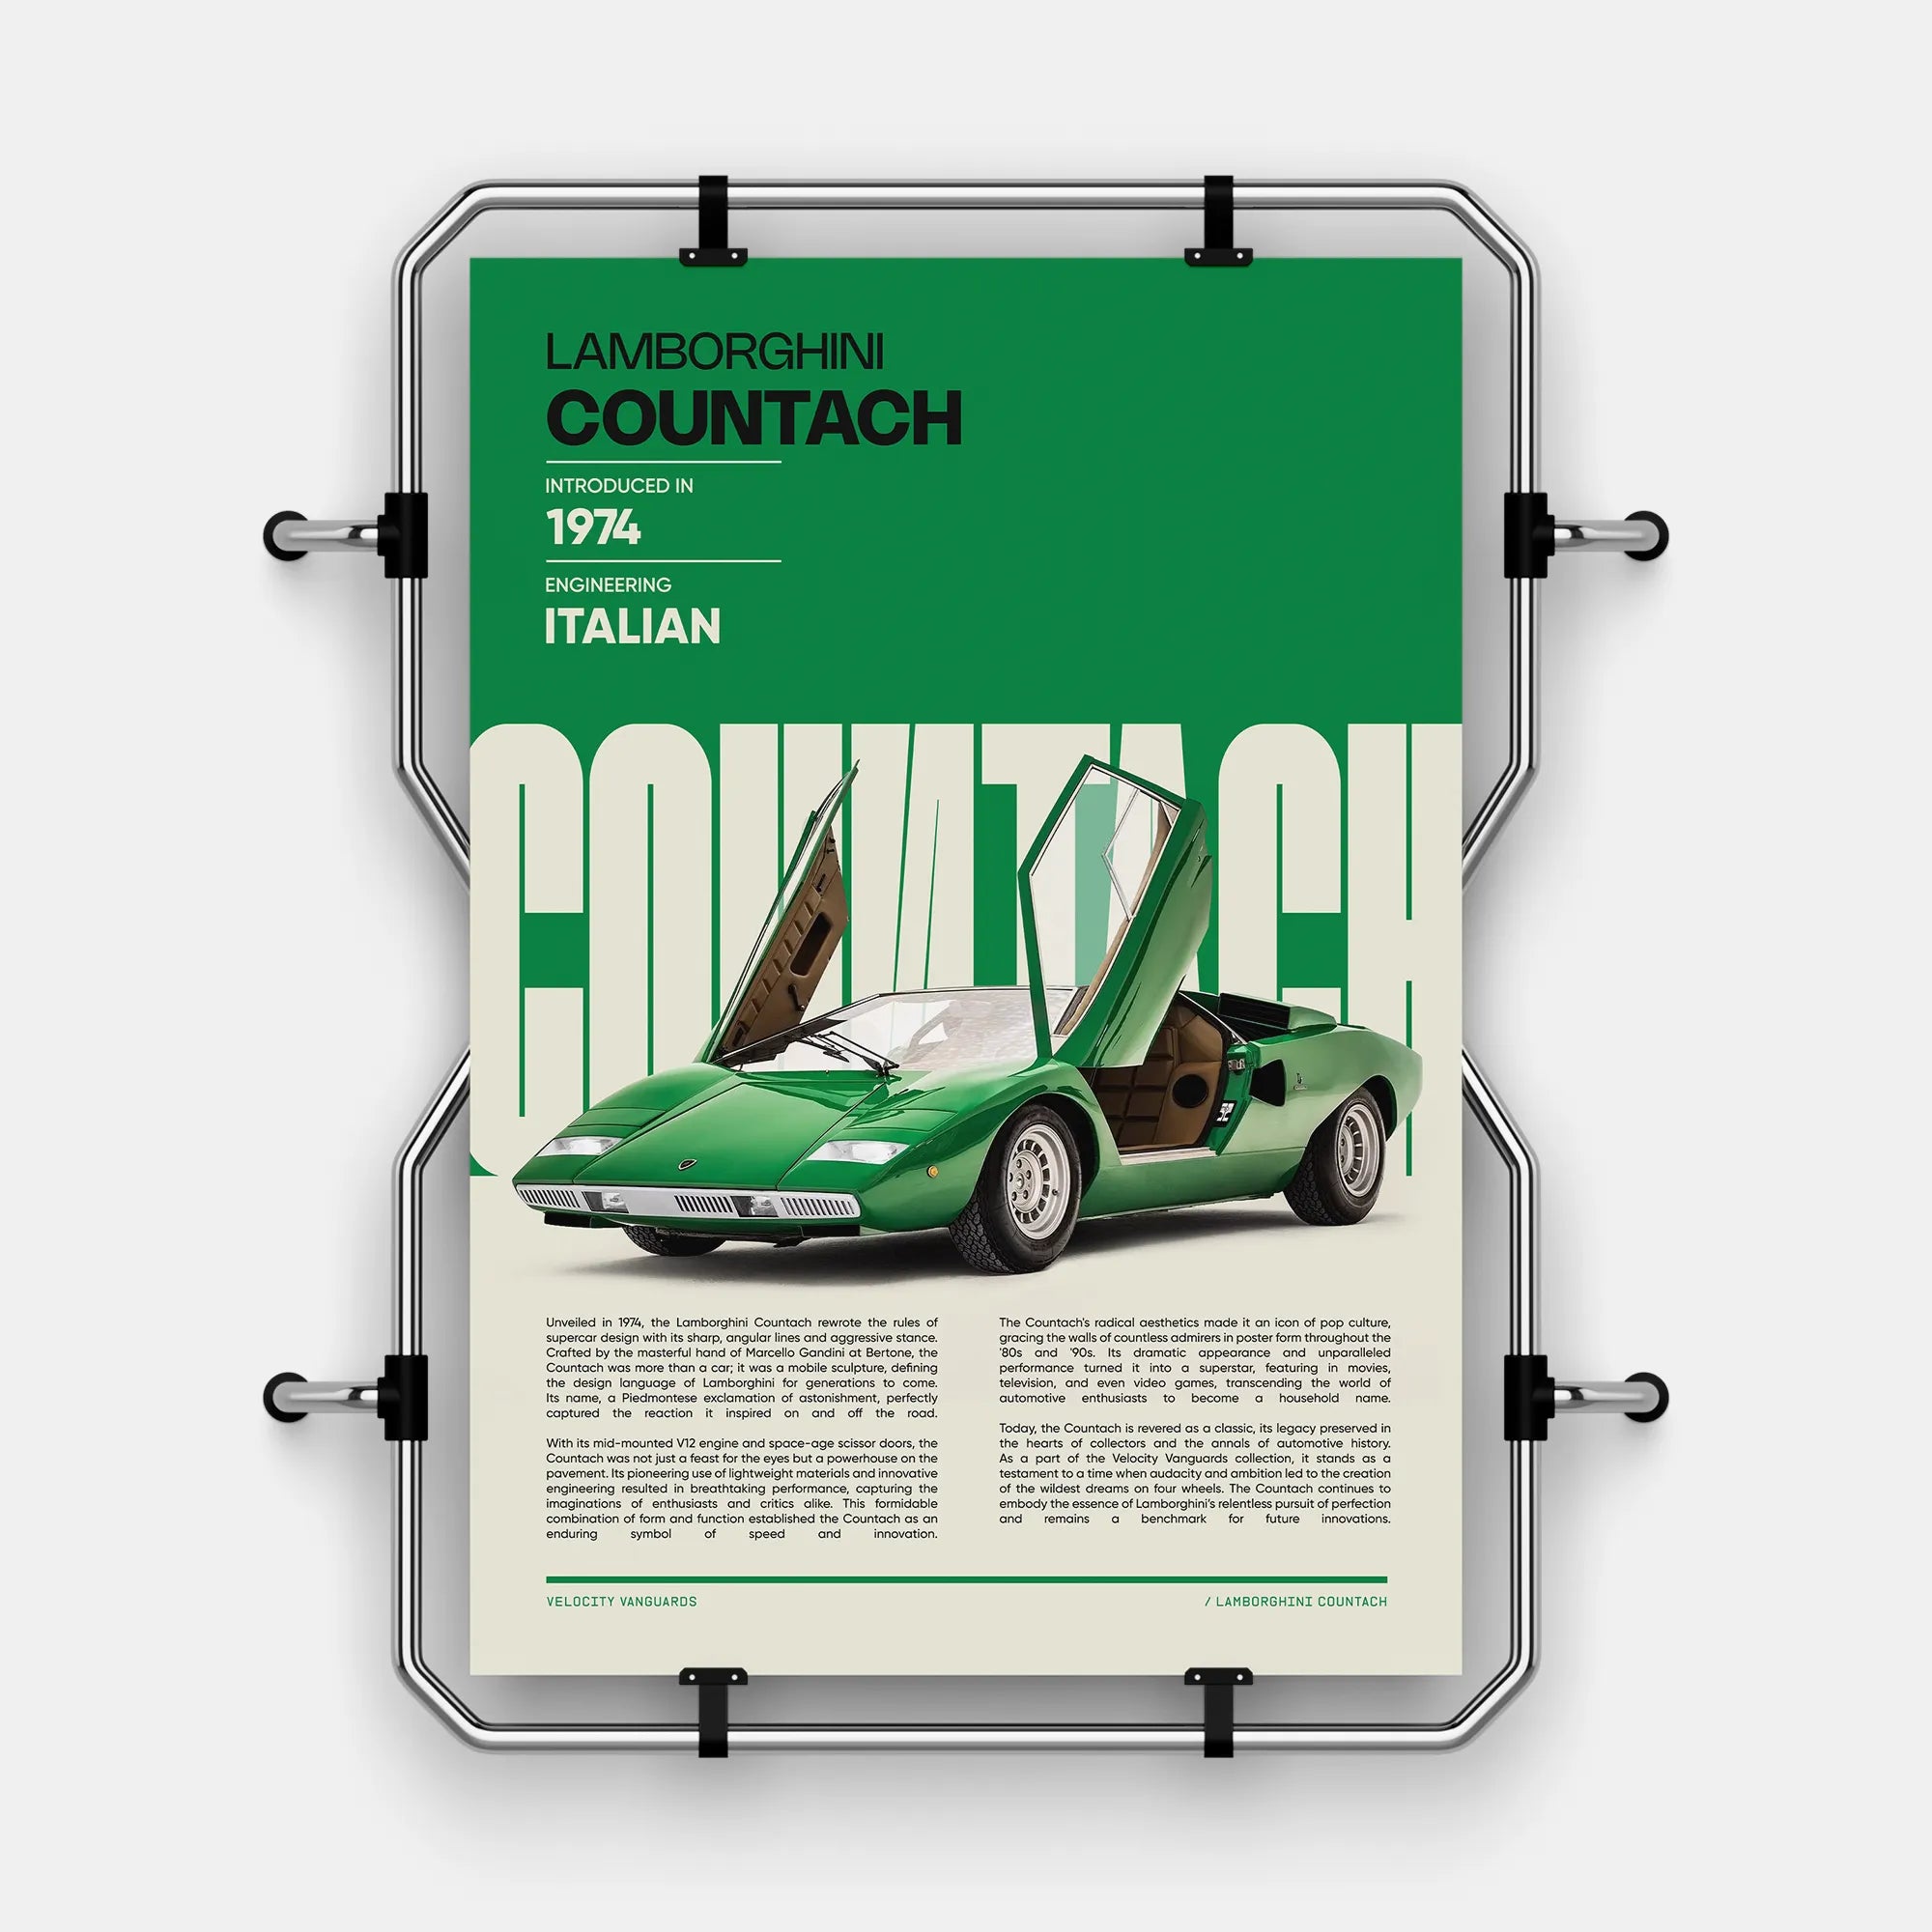 The Lamborghini Countach